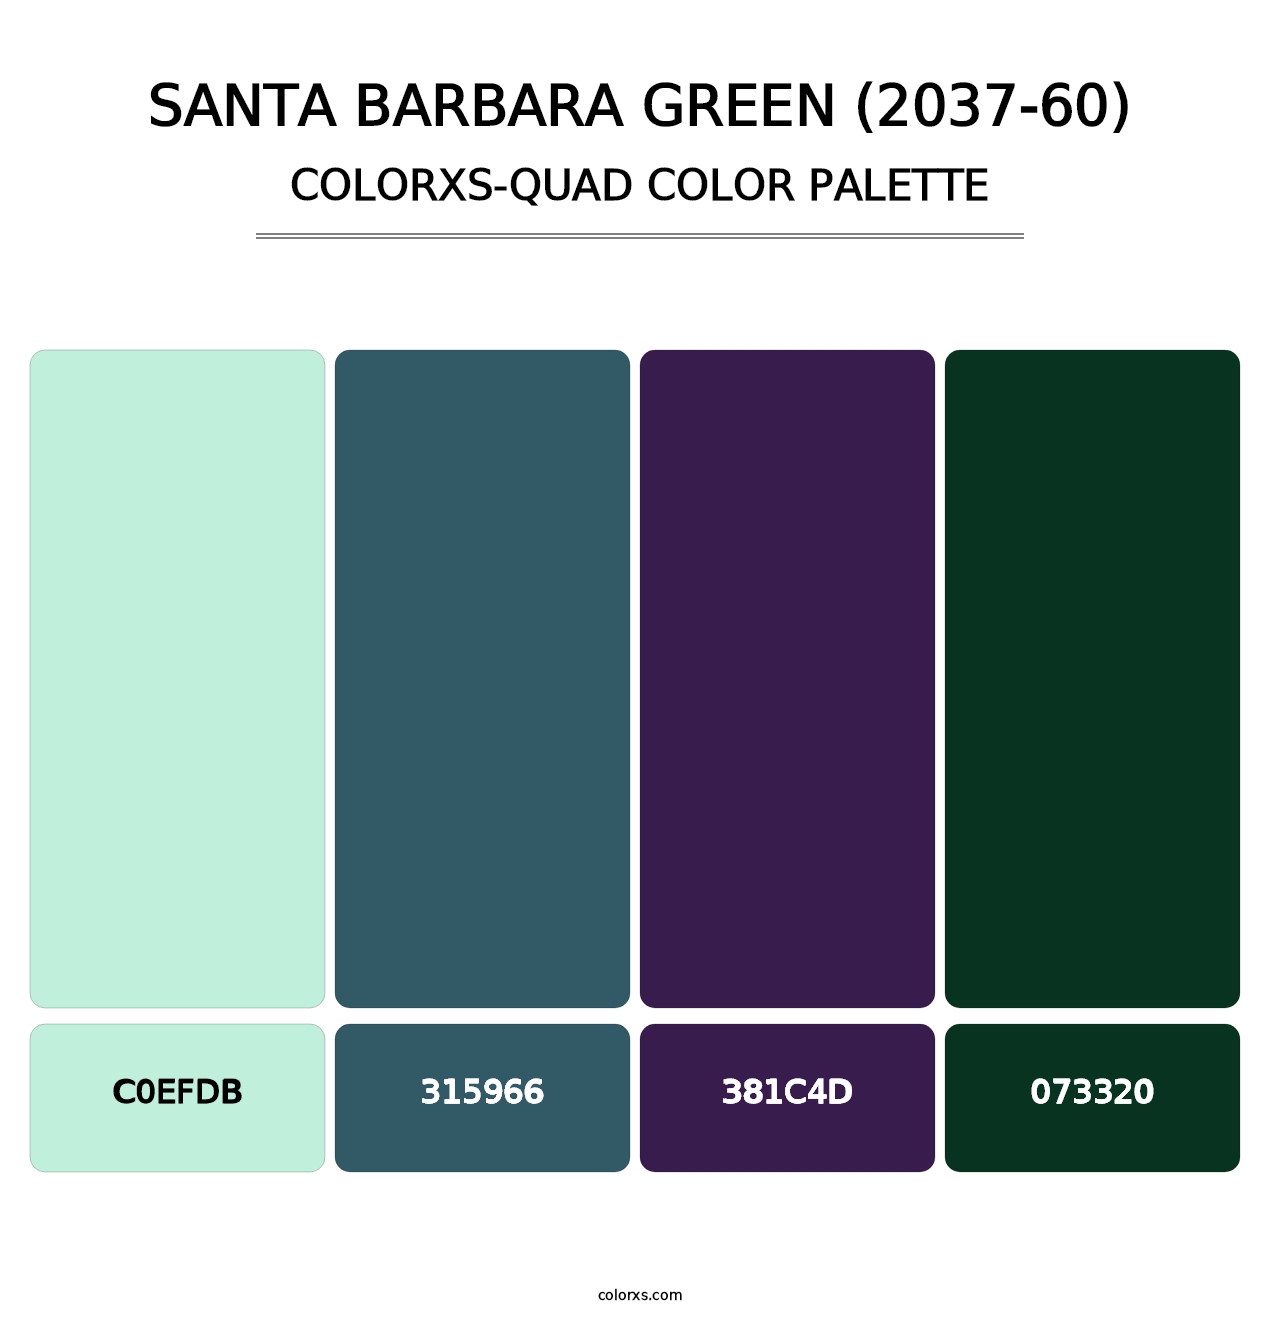 Santa Barbara Green (2037-60) - Colorxs Quad Palette